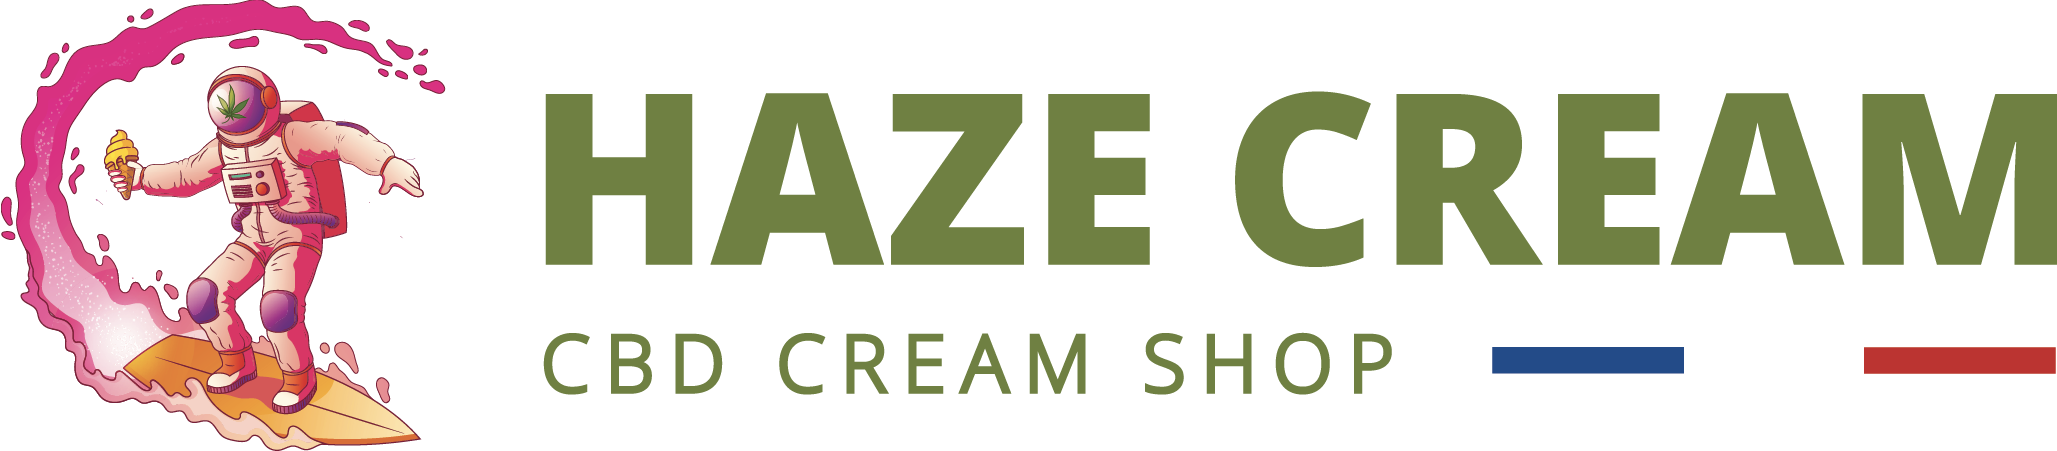 Haze Cream CBD